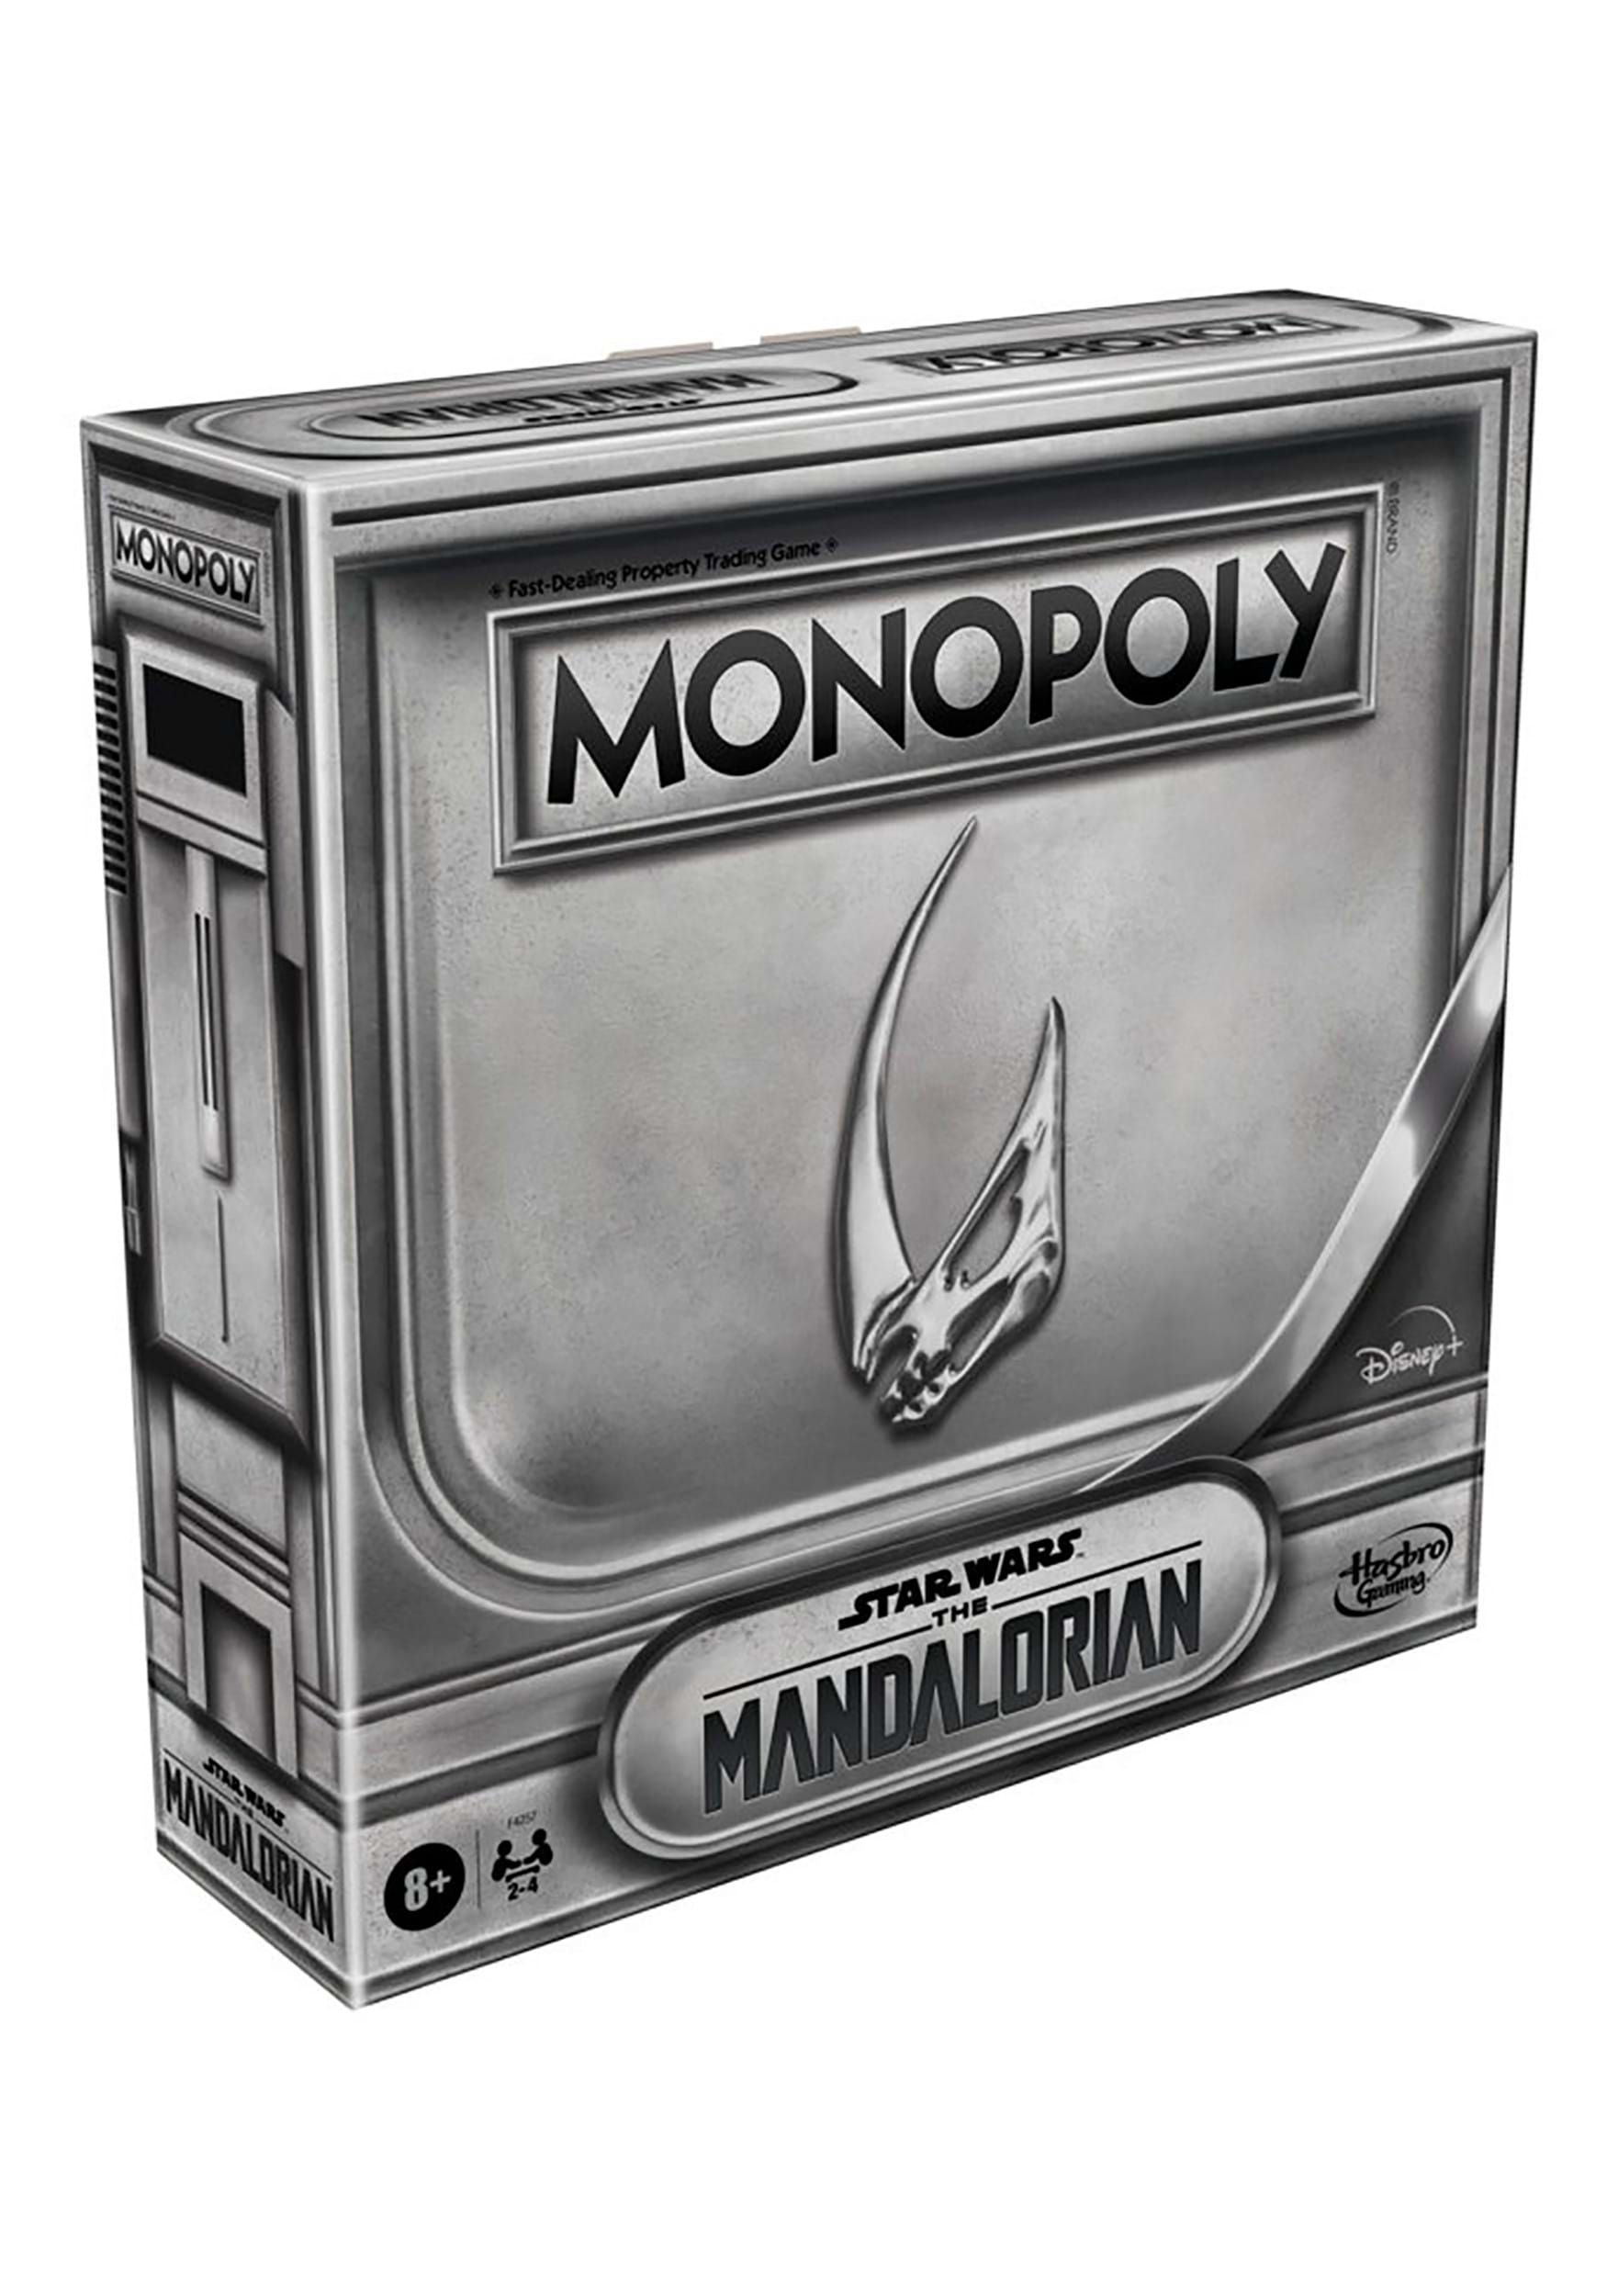 Star Wars: The Mandalorian Season 2 Edition Monopoly Game